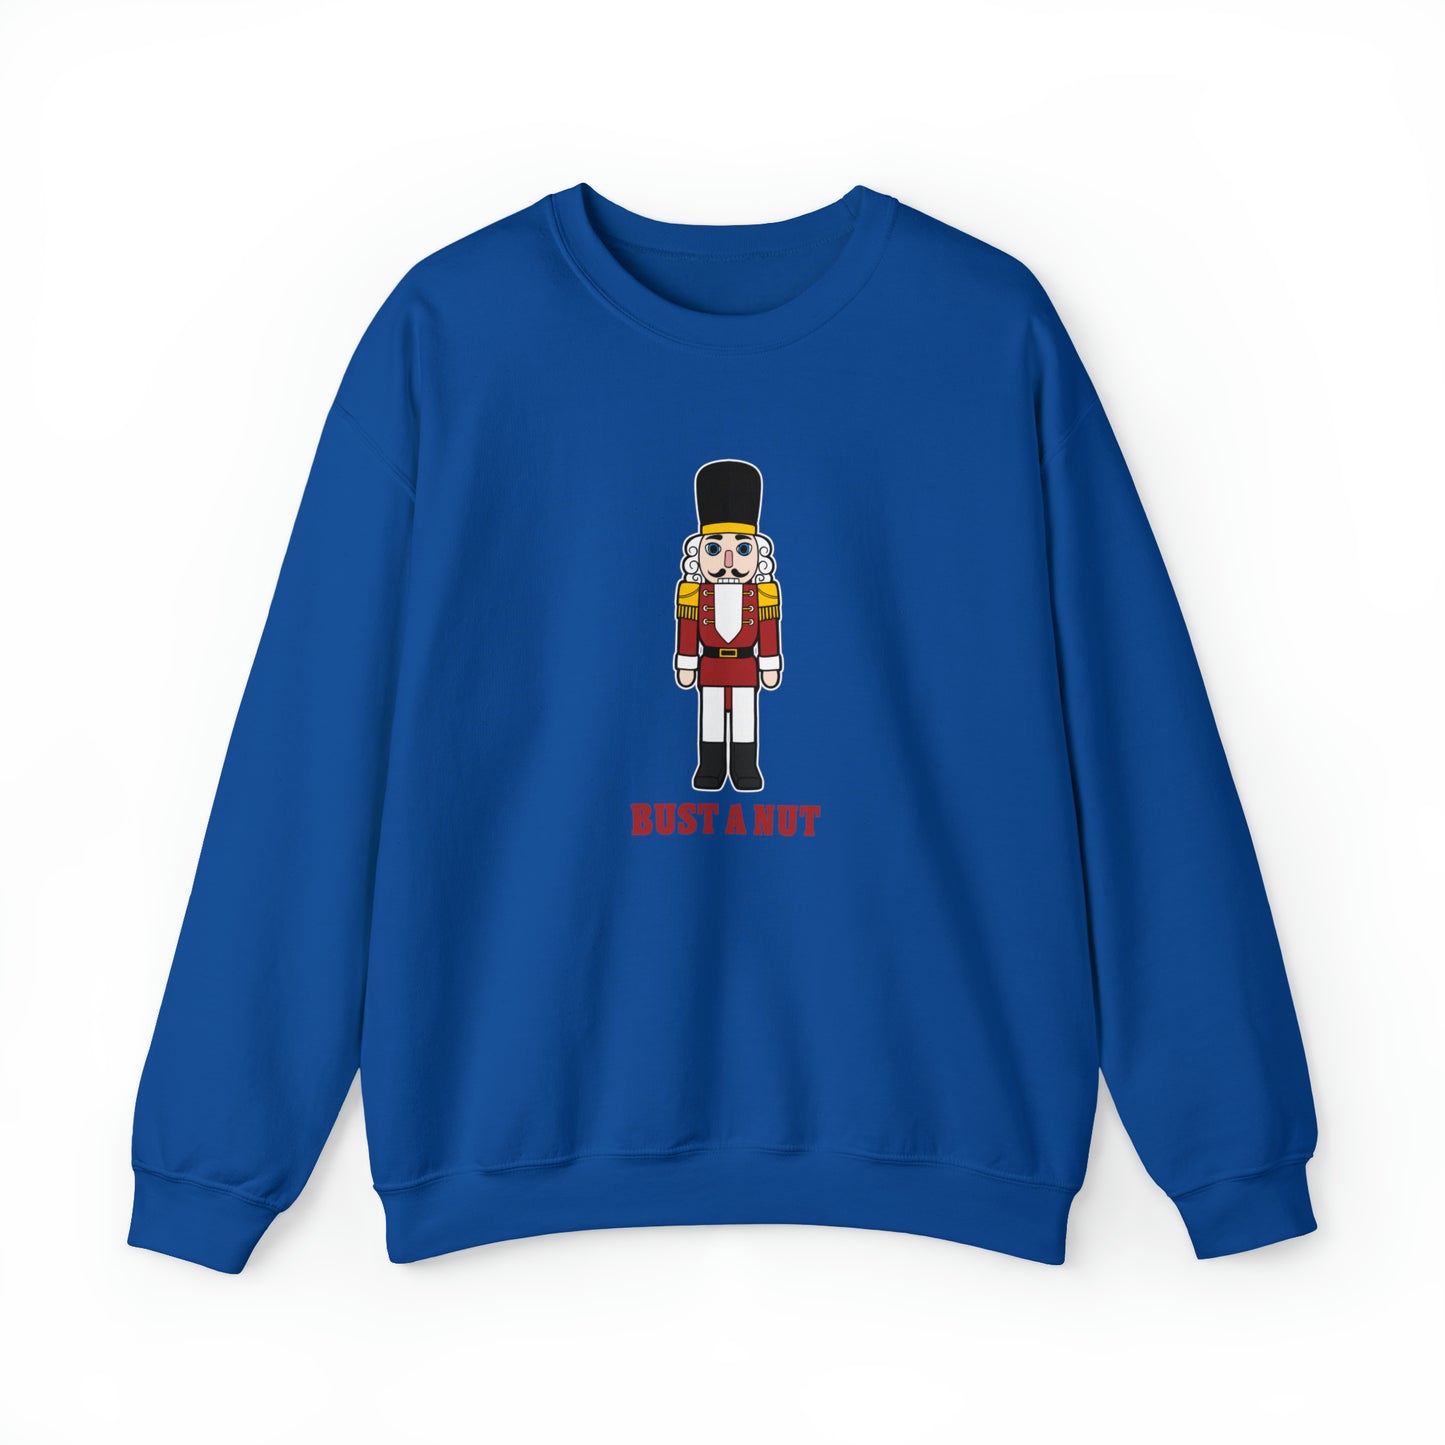 Custom Parody Crewneck Sweatshirt, Bust a Nut Design